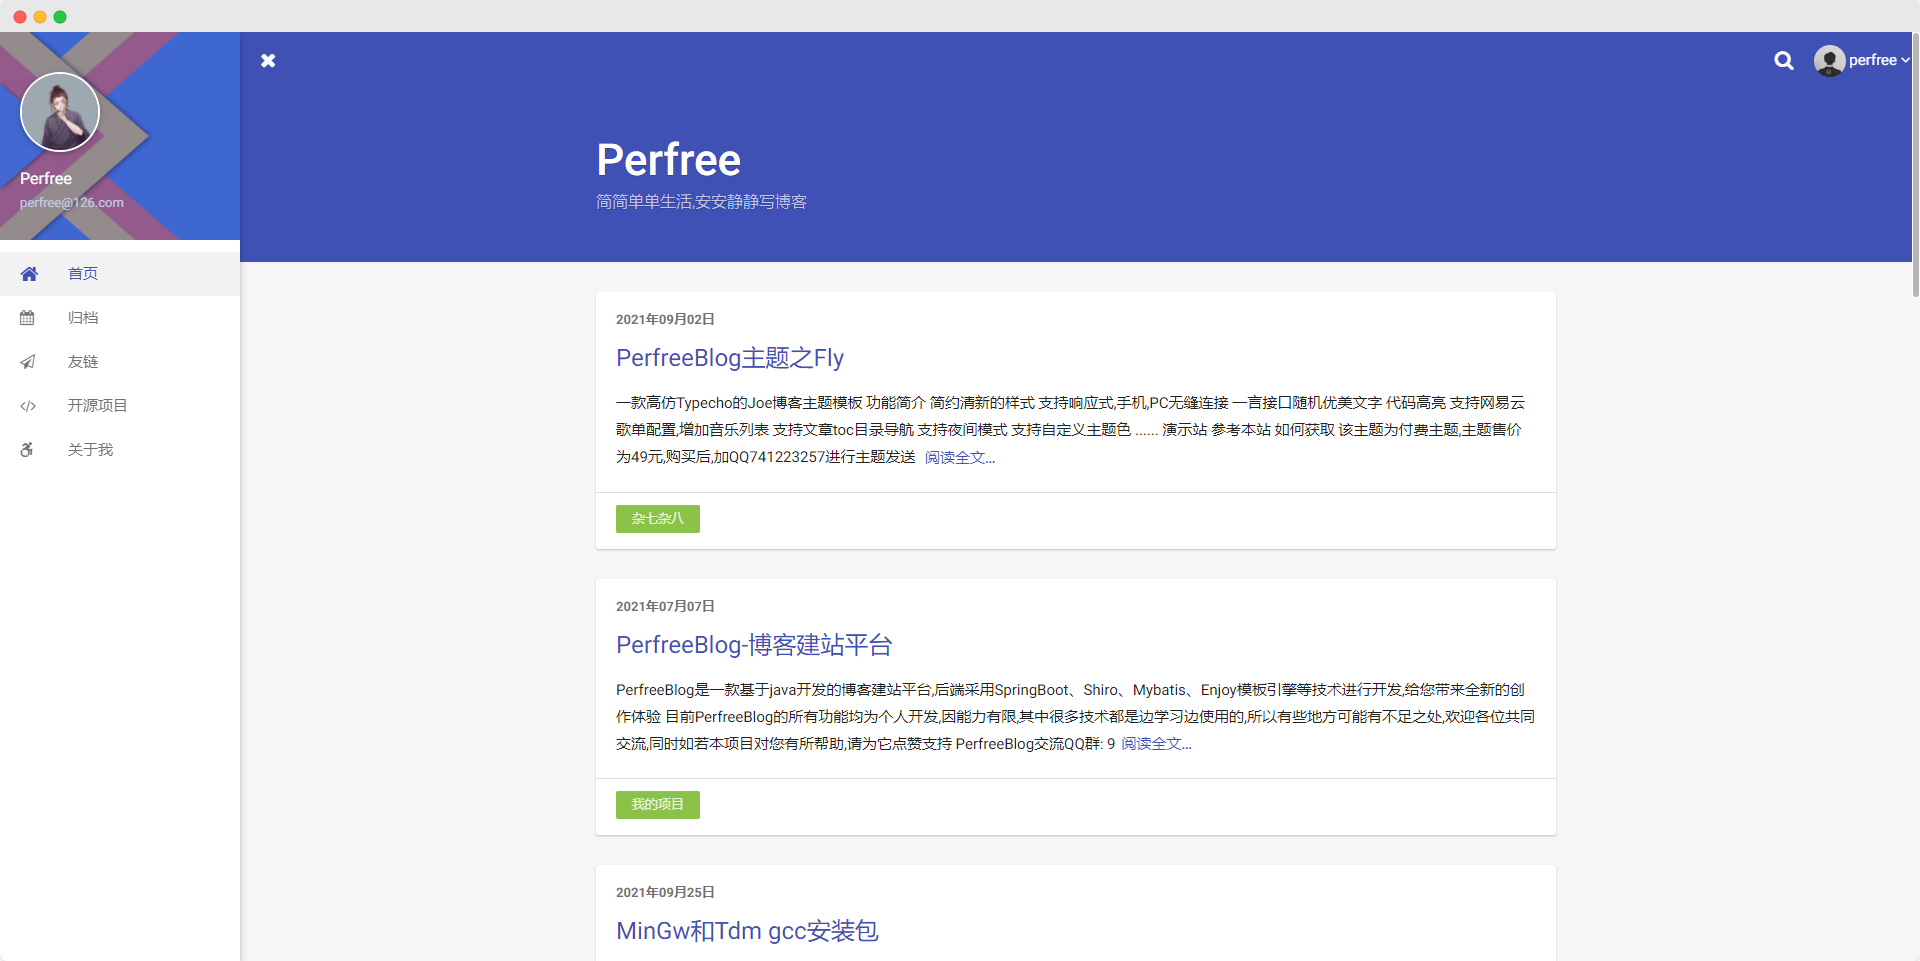 PerfreeBlog 博客建站平台更新至 v1.3.2